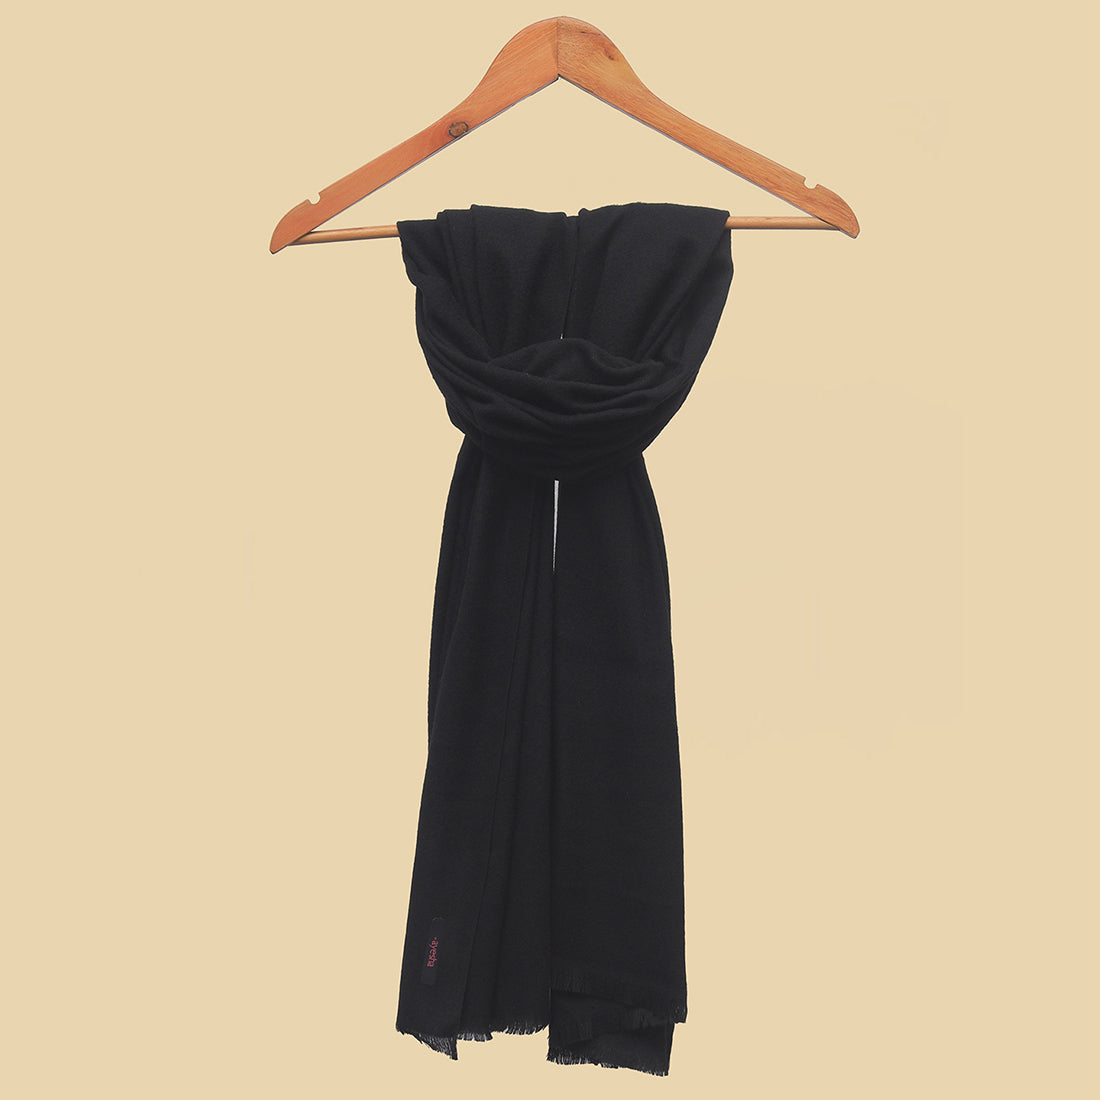 Ayesha Luxuriously soft black acrylic shawl, perfect for any occasion.